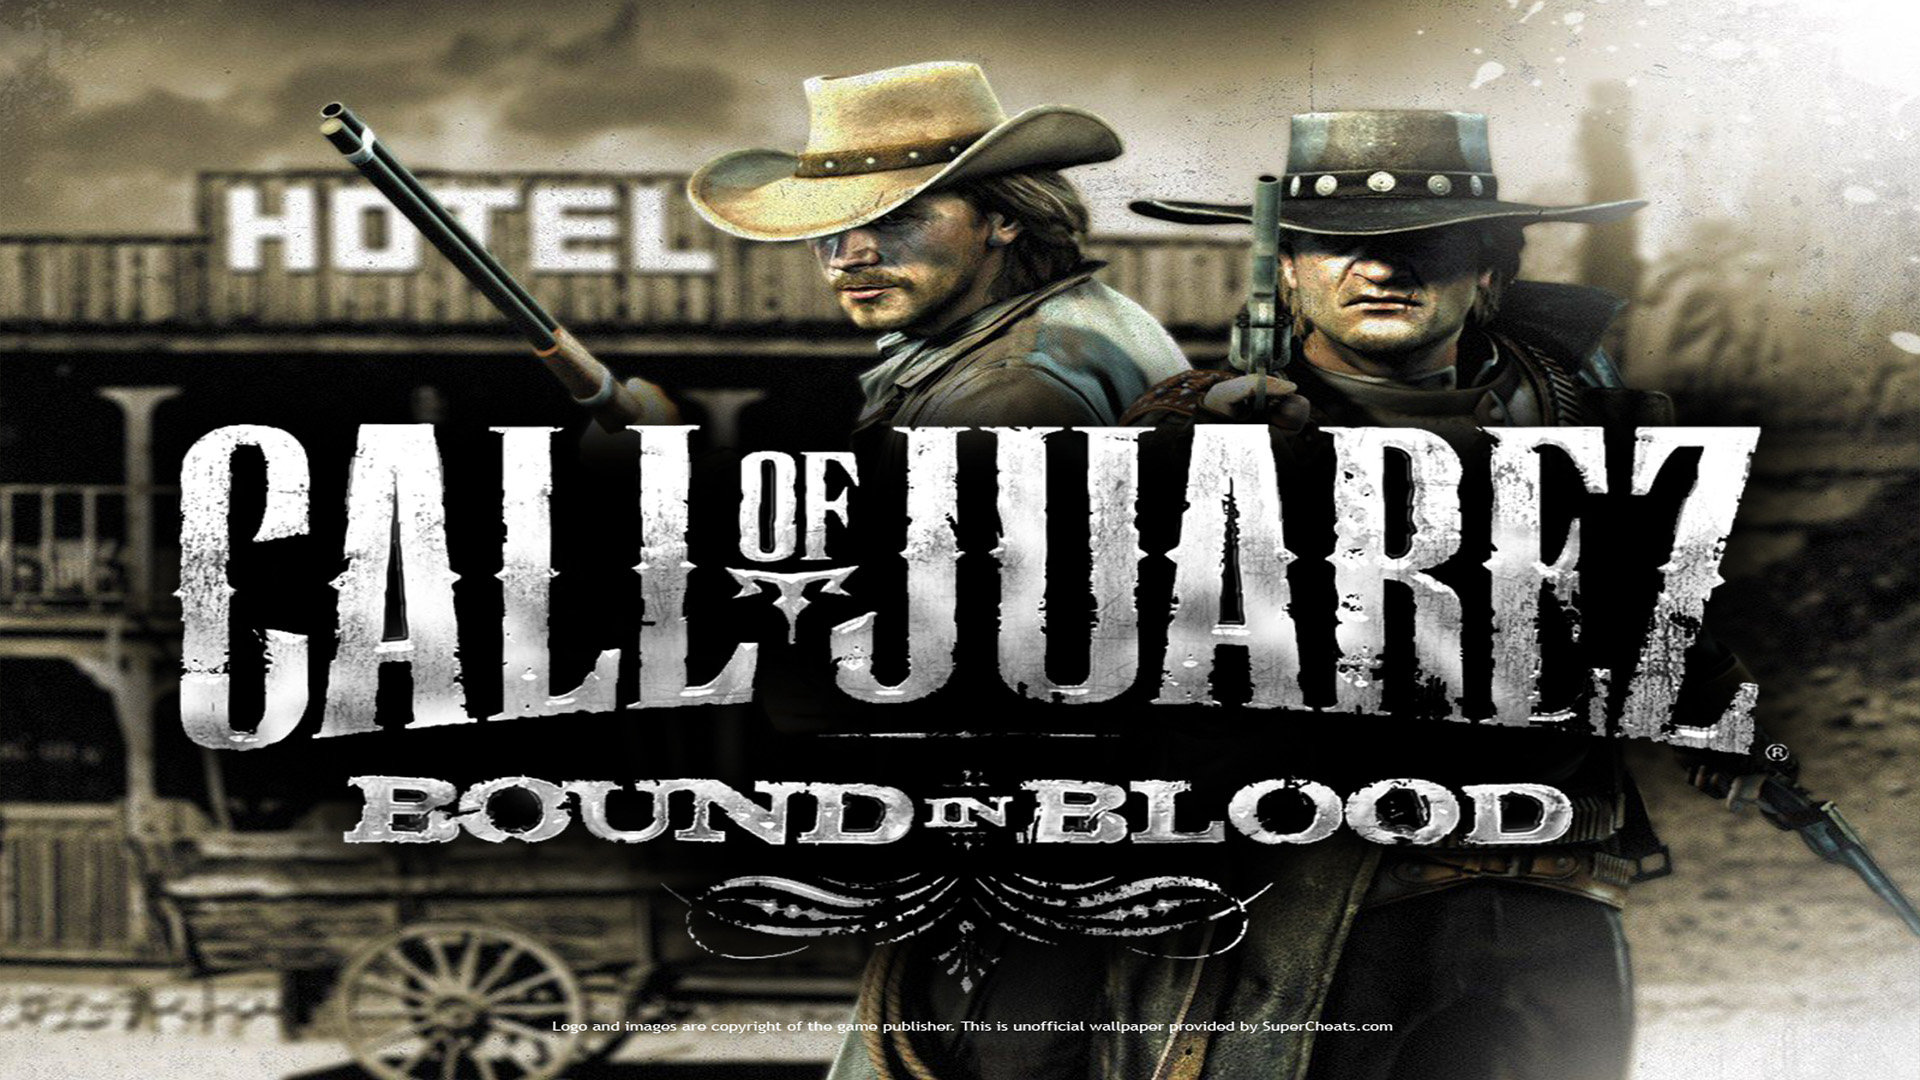 Best Call Of Juarez: Bound In Blood wallpaper ID:131549 for High Resolution full hd 1920x1080 desktop